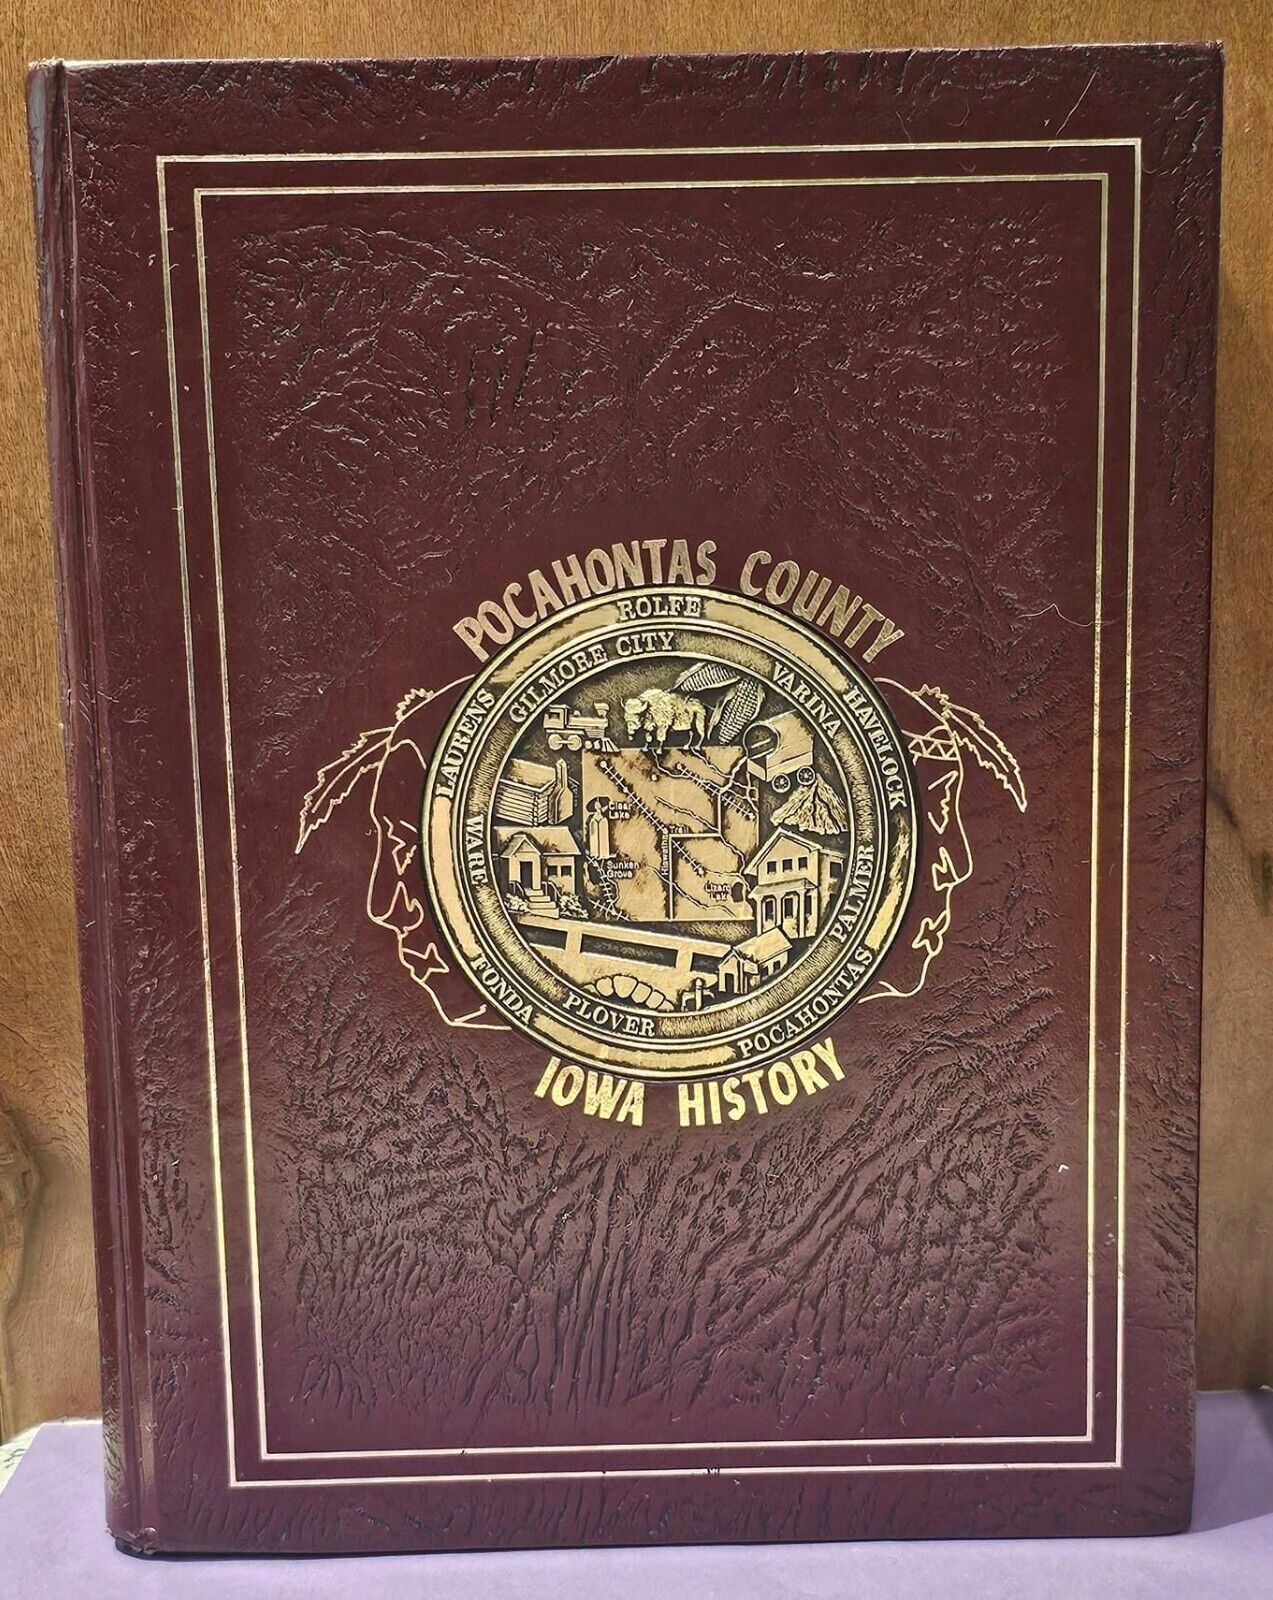 1982 Pocahontas County Iowa History Genealogy Hardback 774 Pages EUC